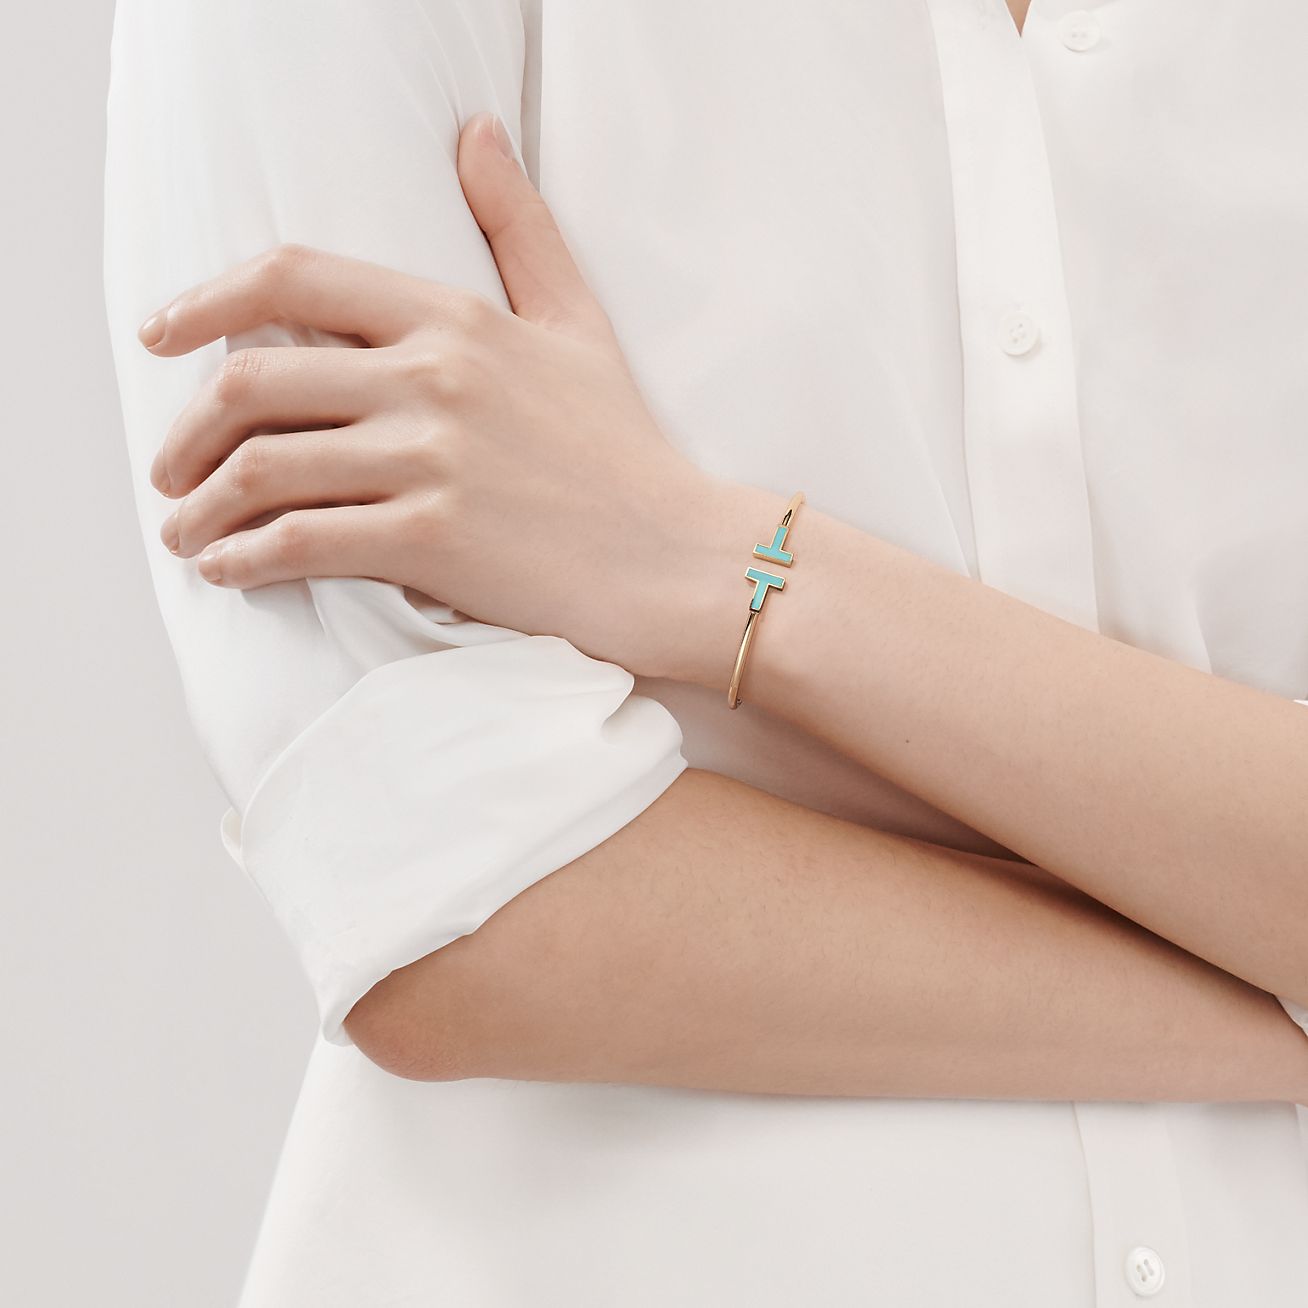 Tiffany T turquoise wire bracelet in 